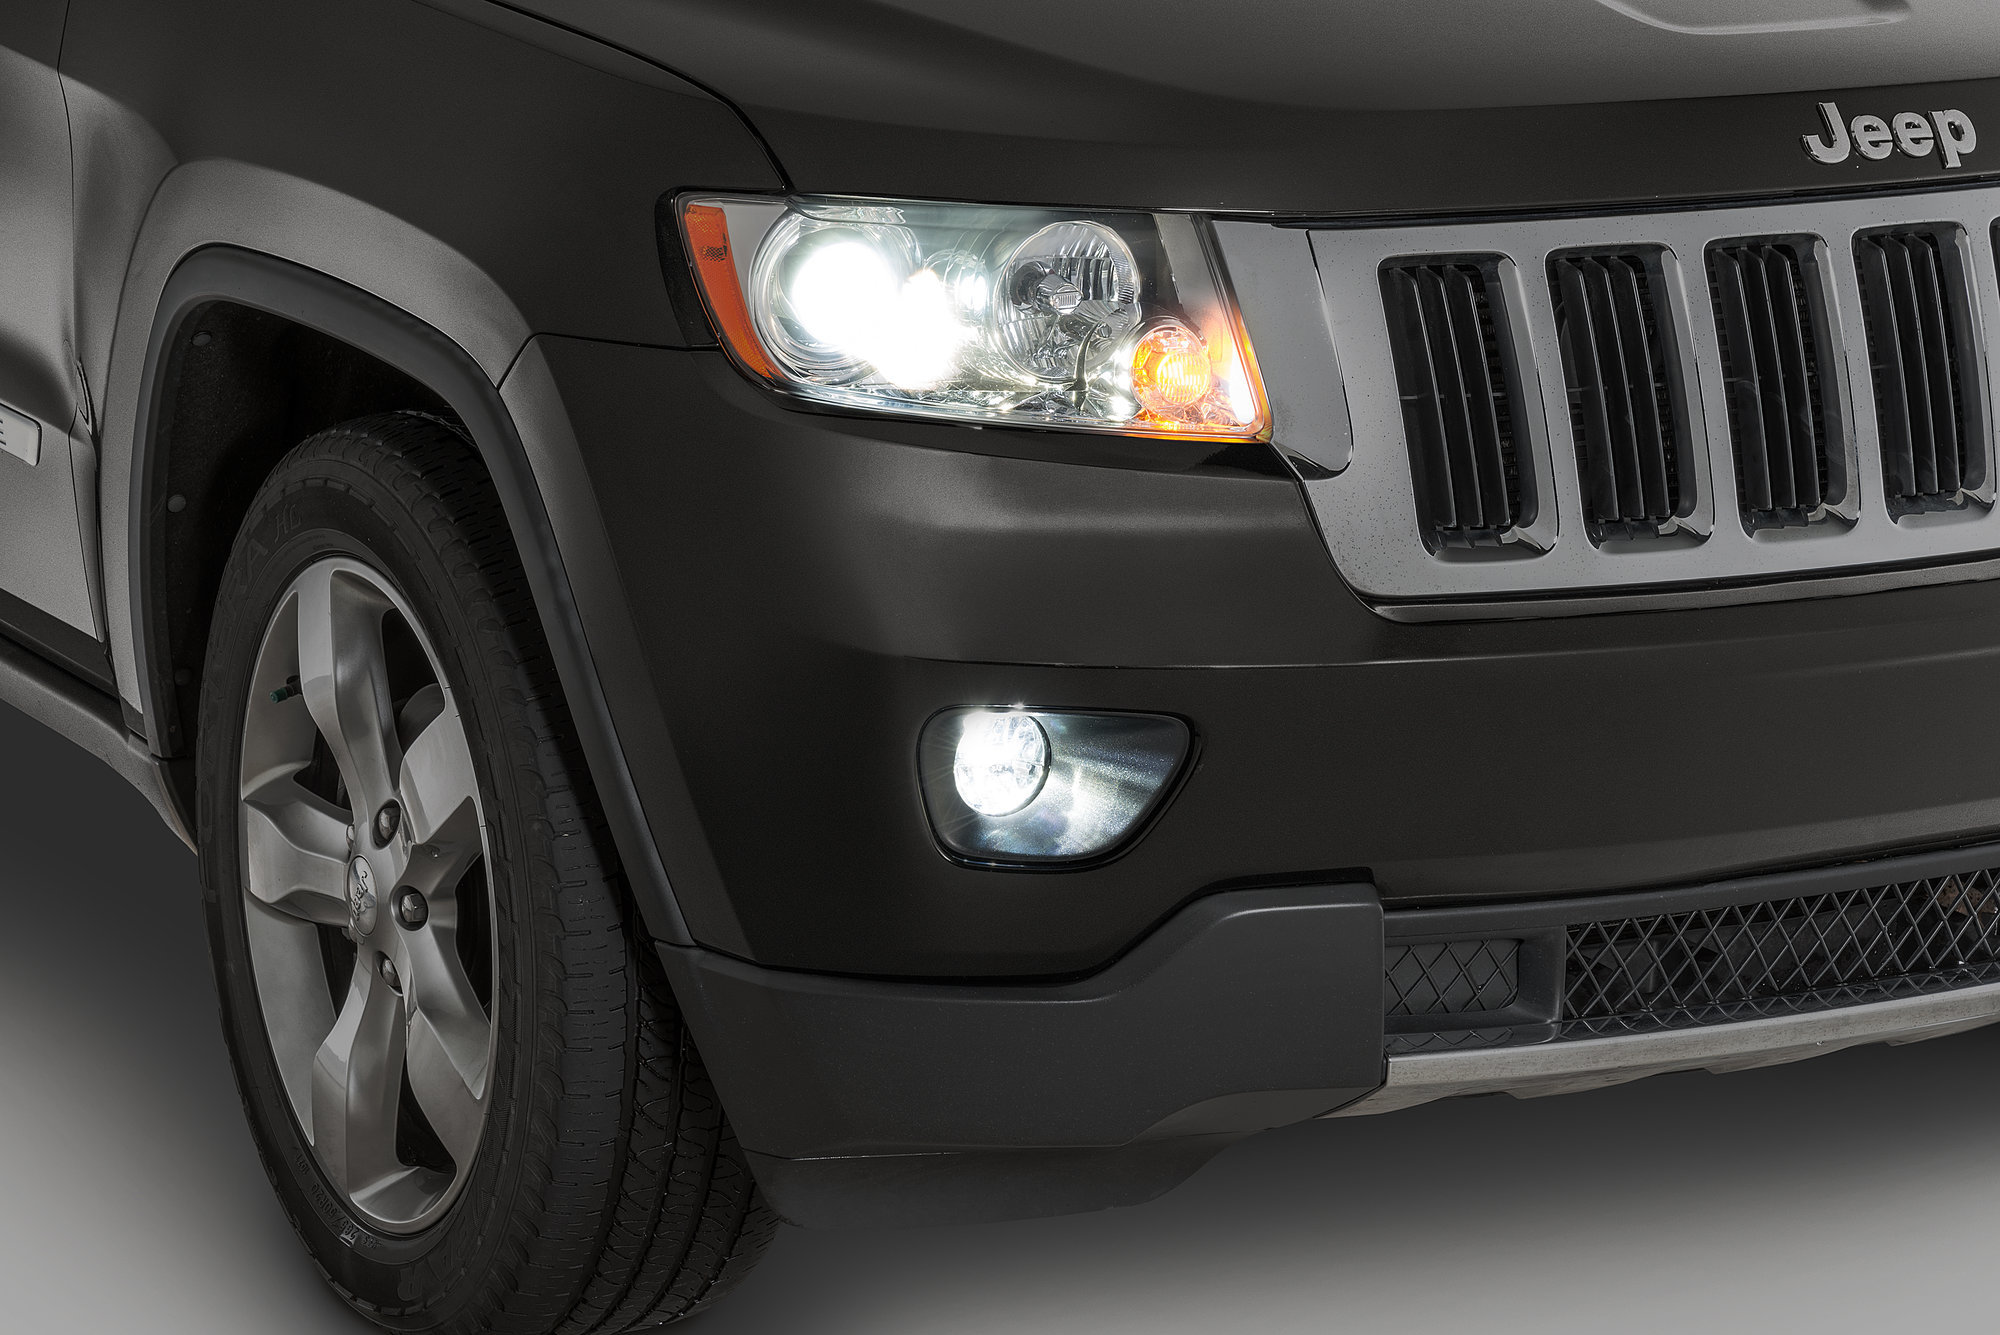 Quadratec LED Fog Lights Kit for 11-13 Jeep Grand Cherokee WK2.